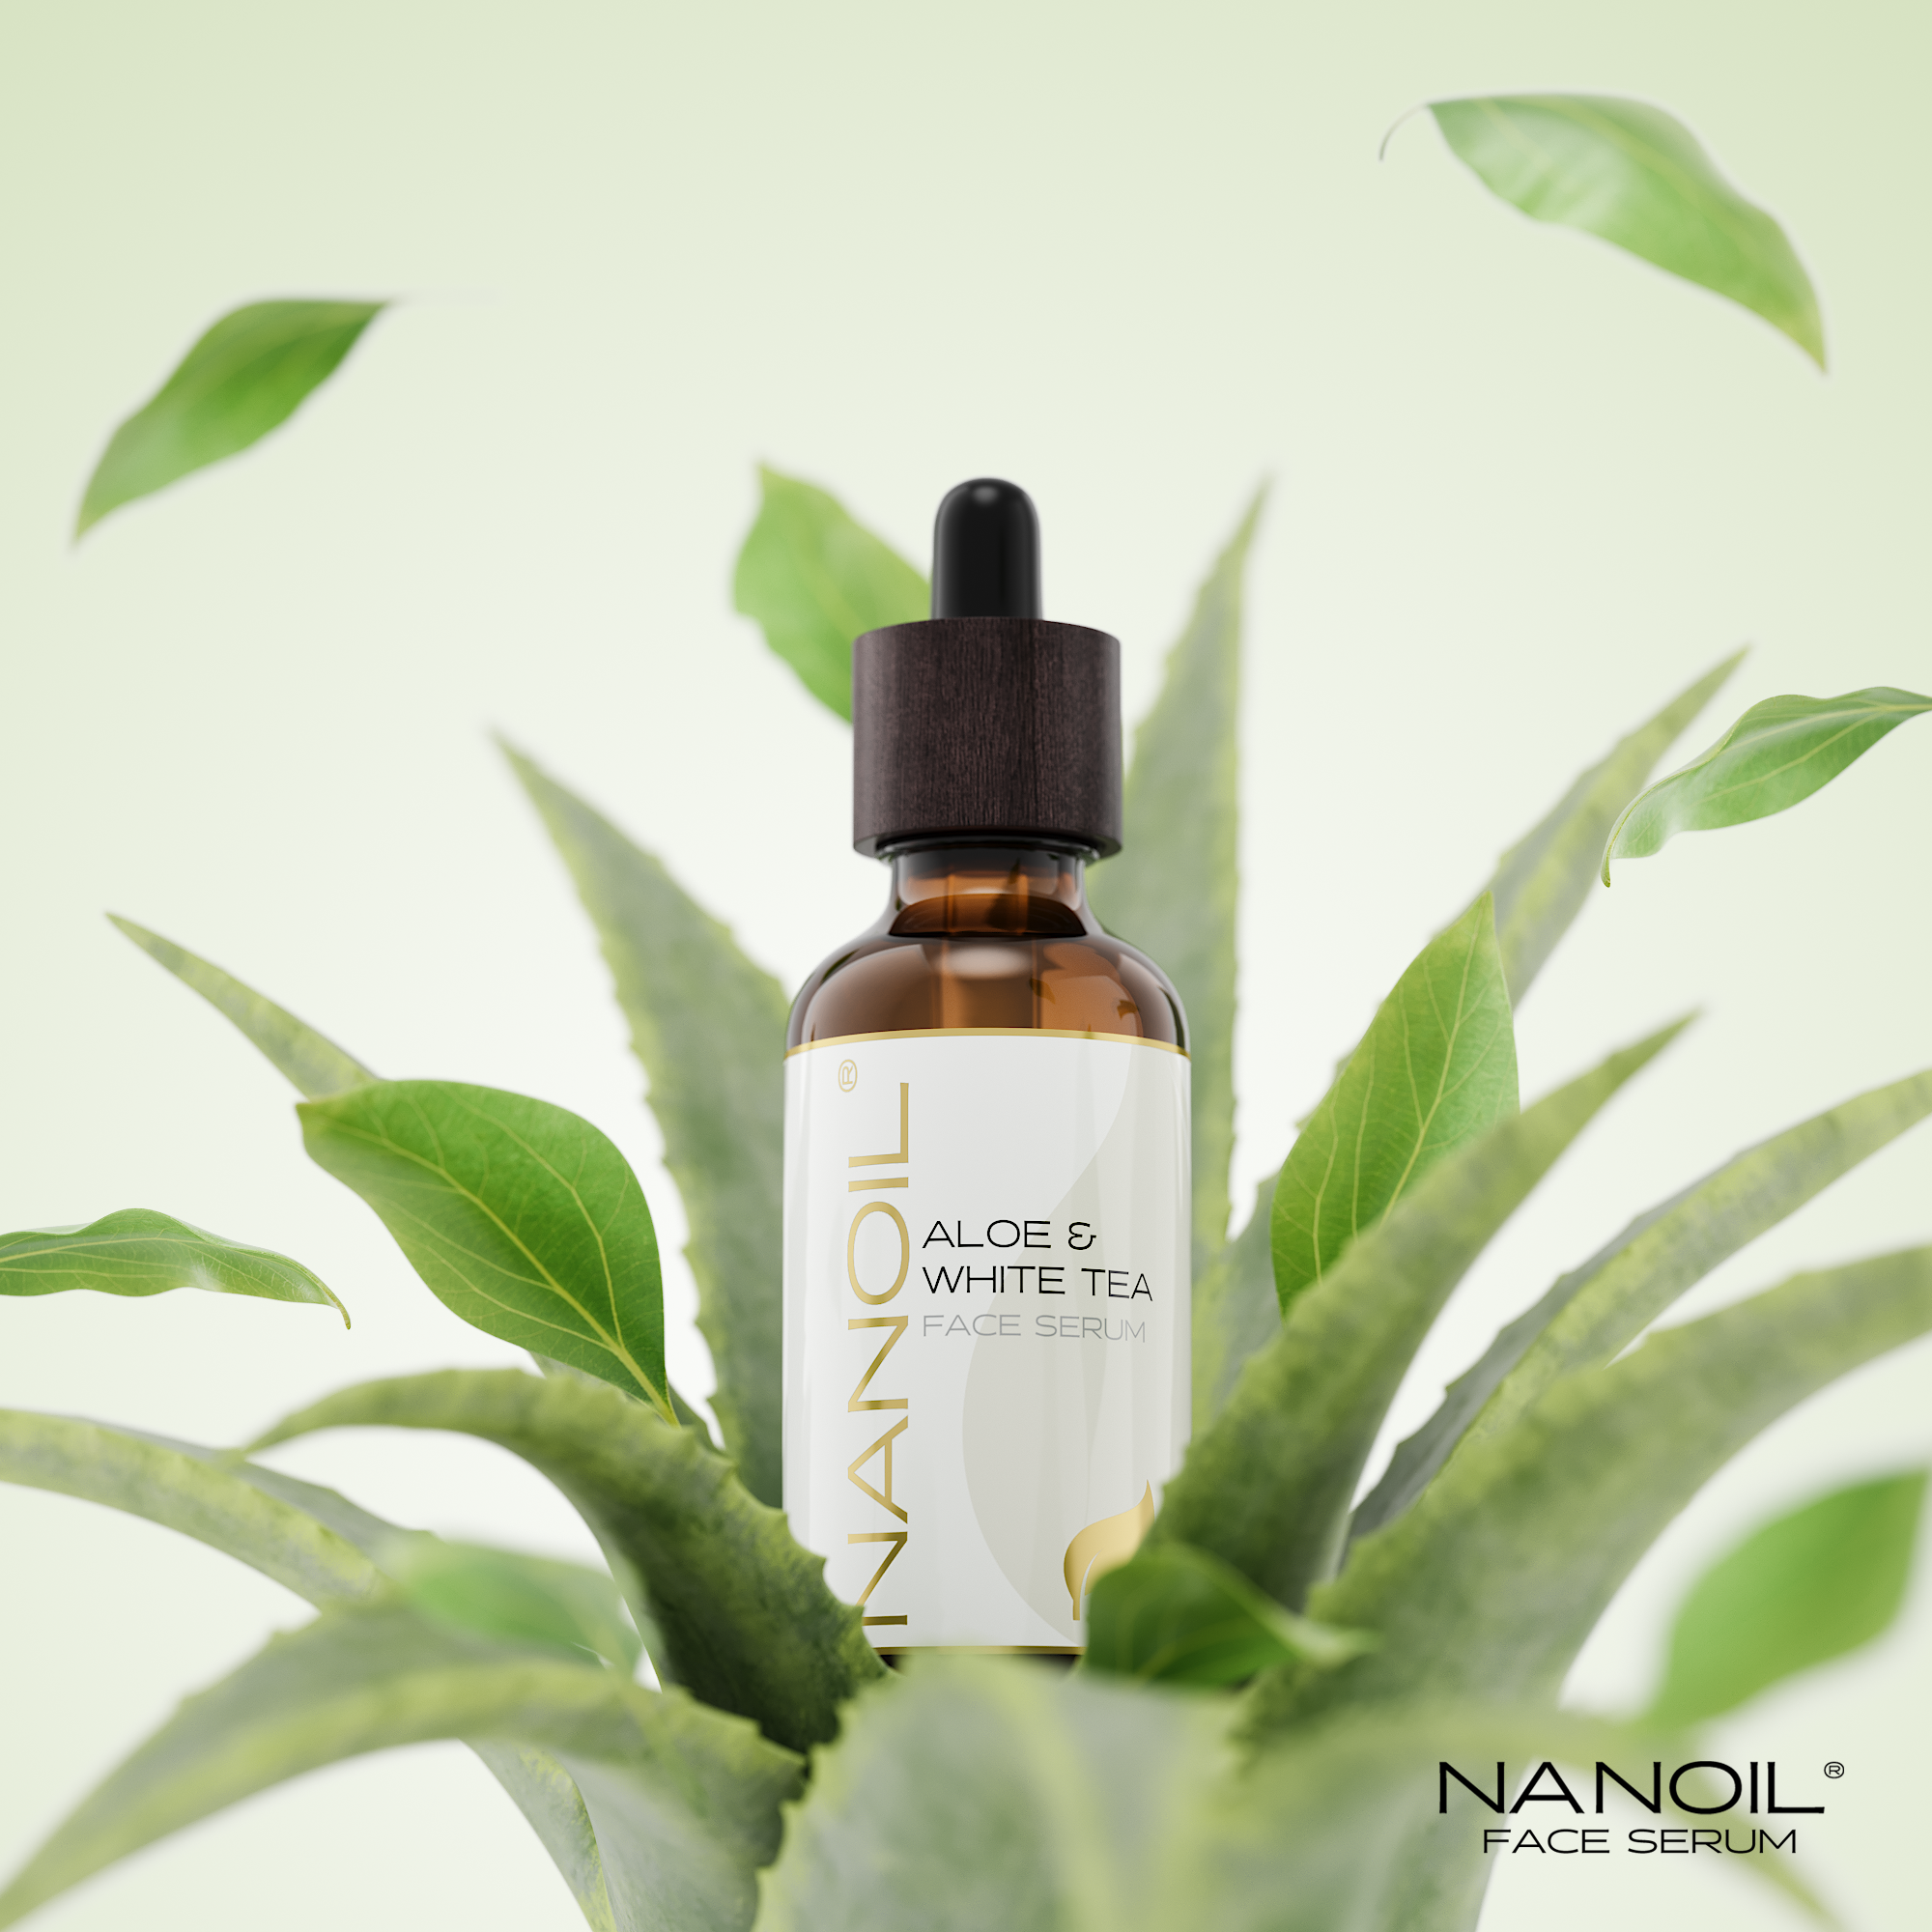 Nanoil Aloe & White Tea Face Serum